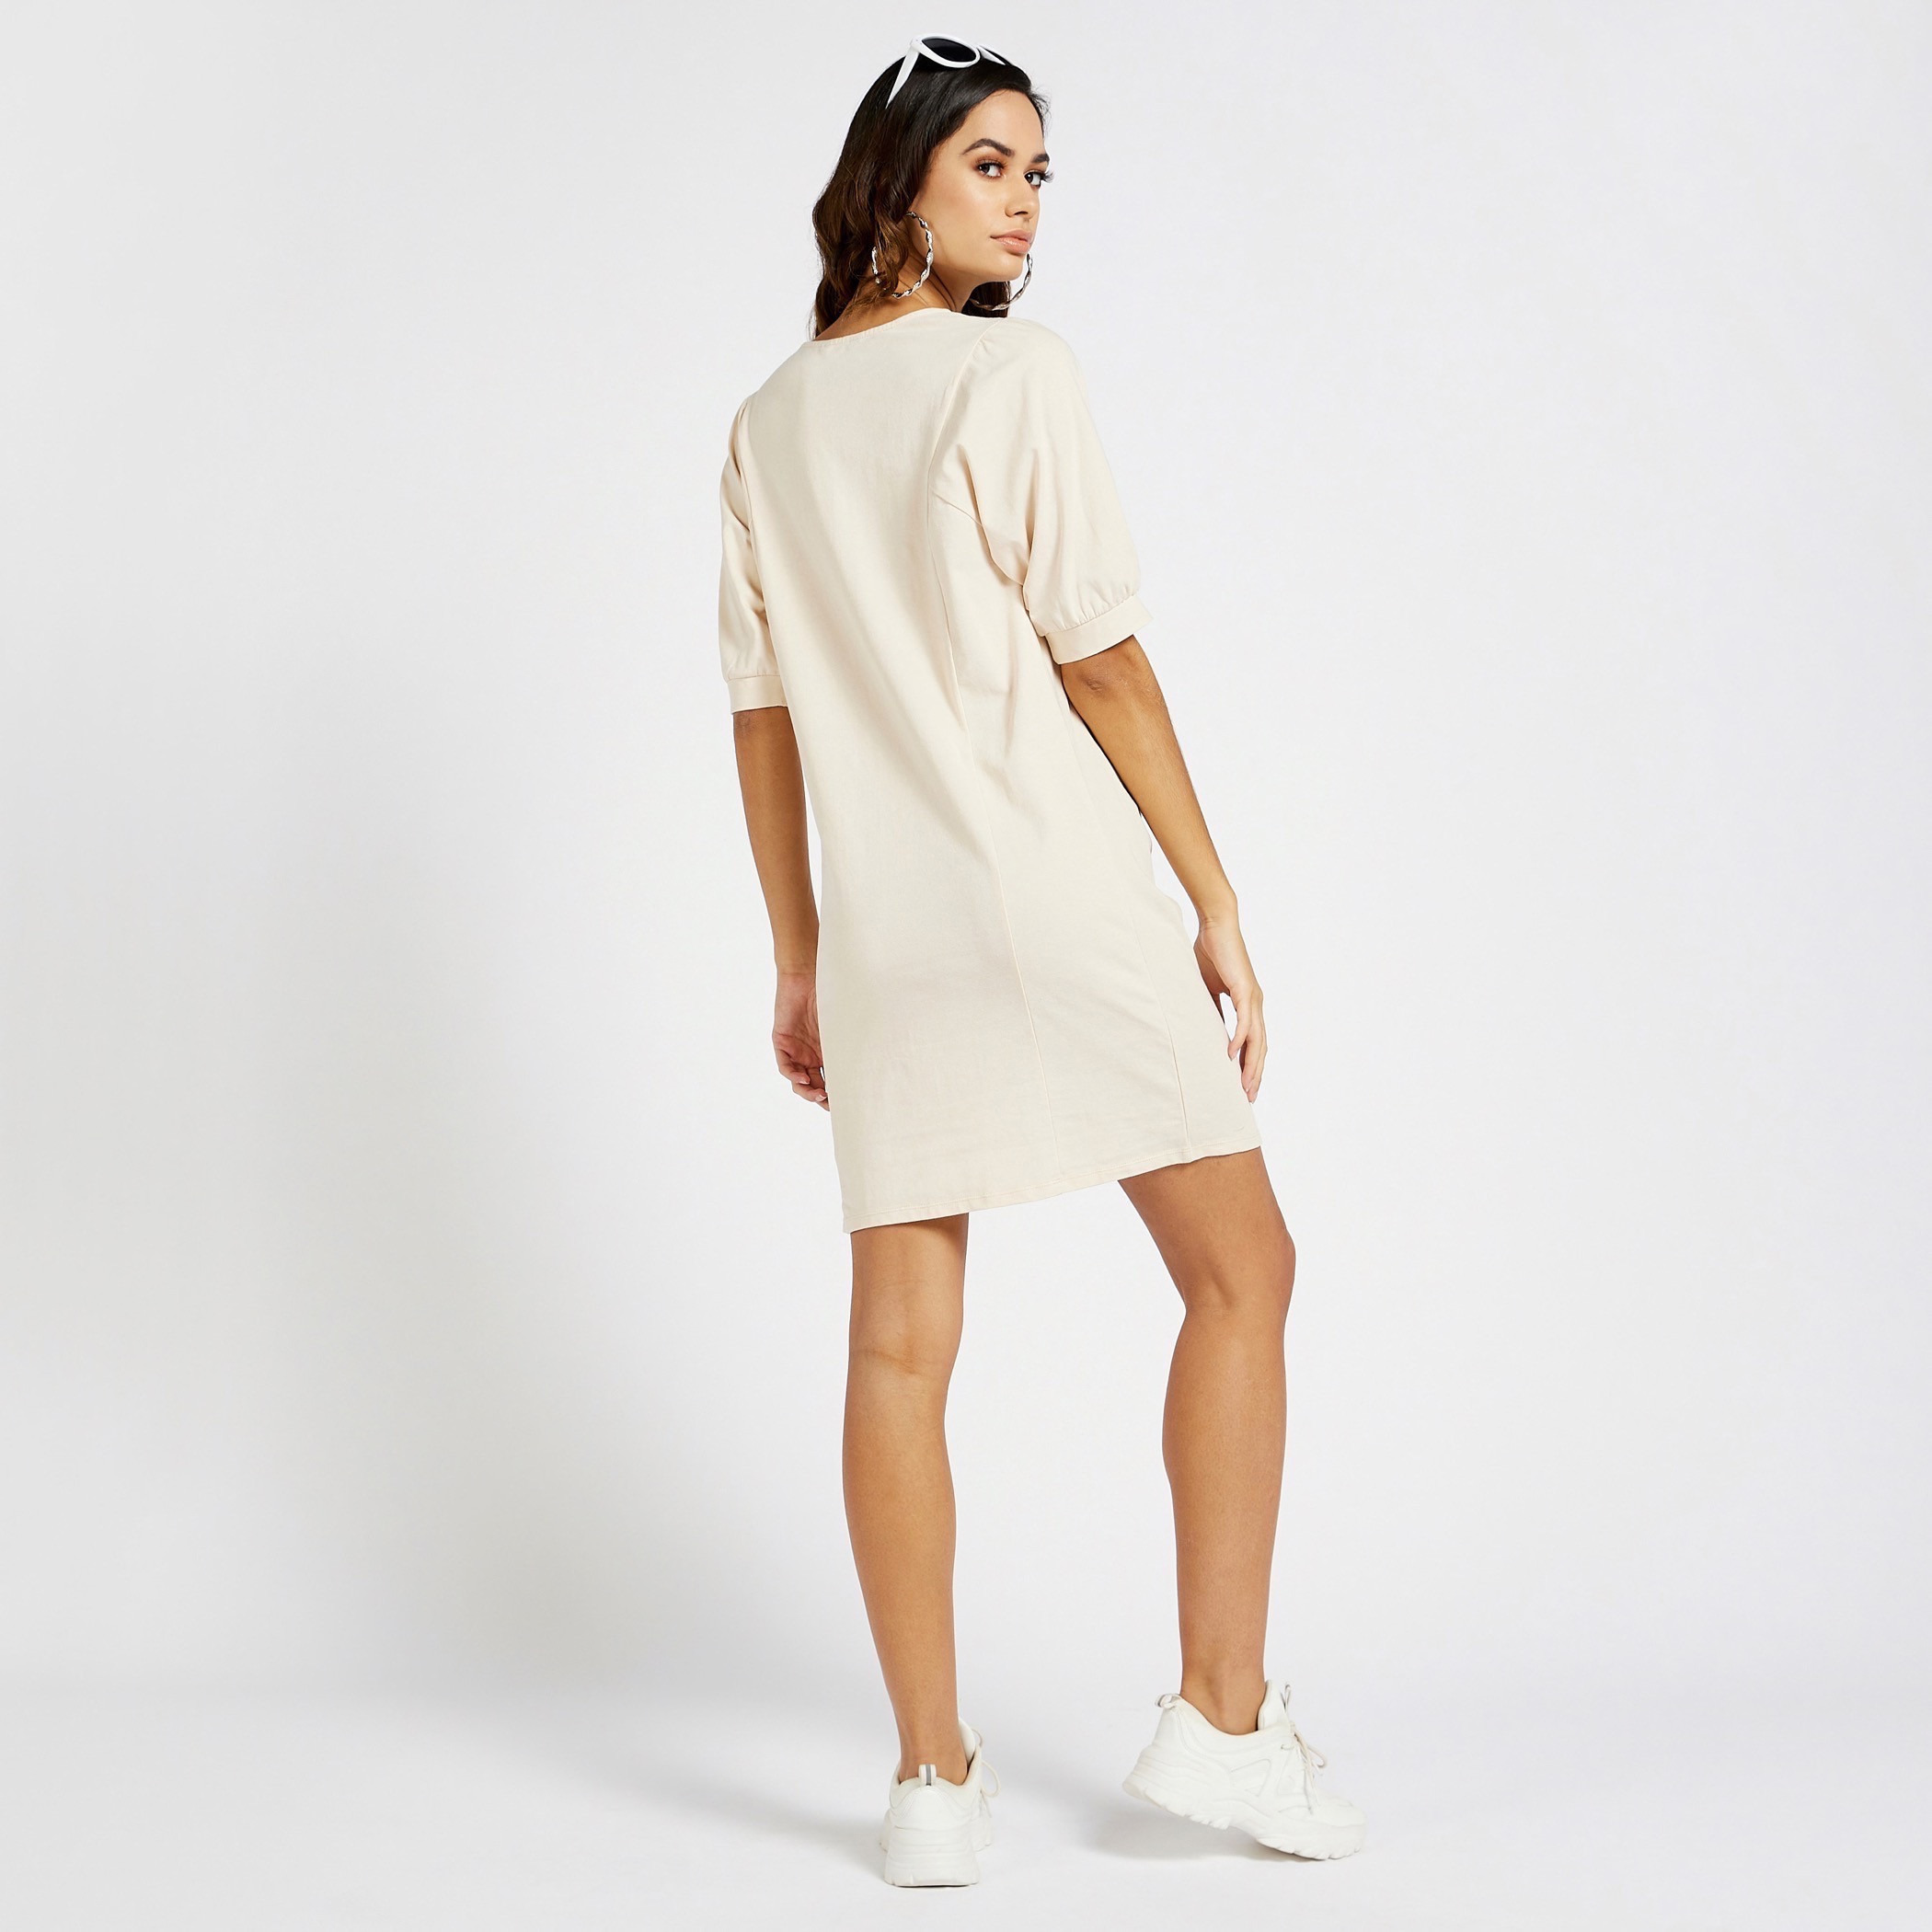 Buy FREECULTR Women's T-Shirt Knee Length Dress | Bamboo Coton T-Shirt Dress  | Long T-Shirt Top at Amazon.in